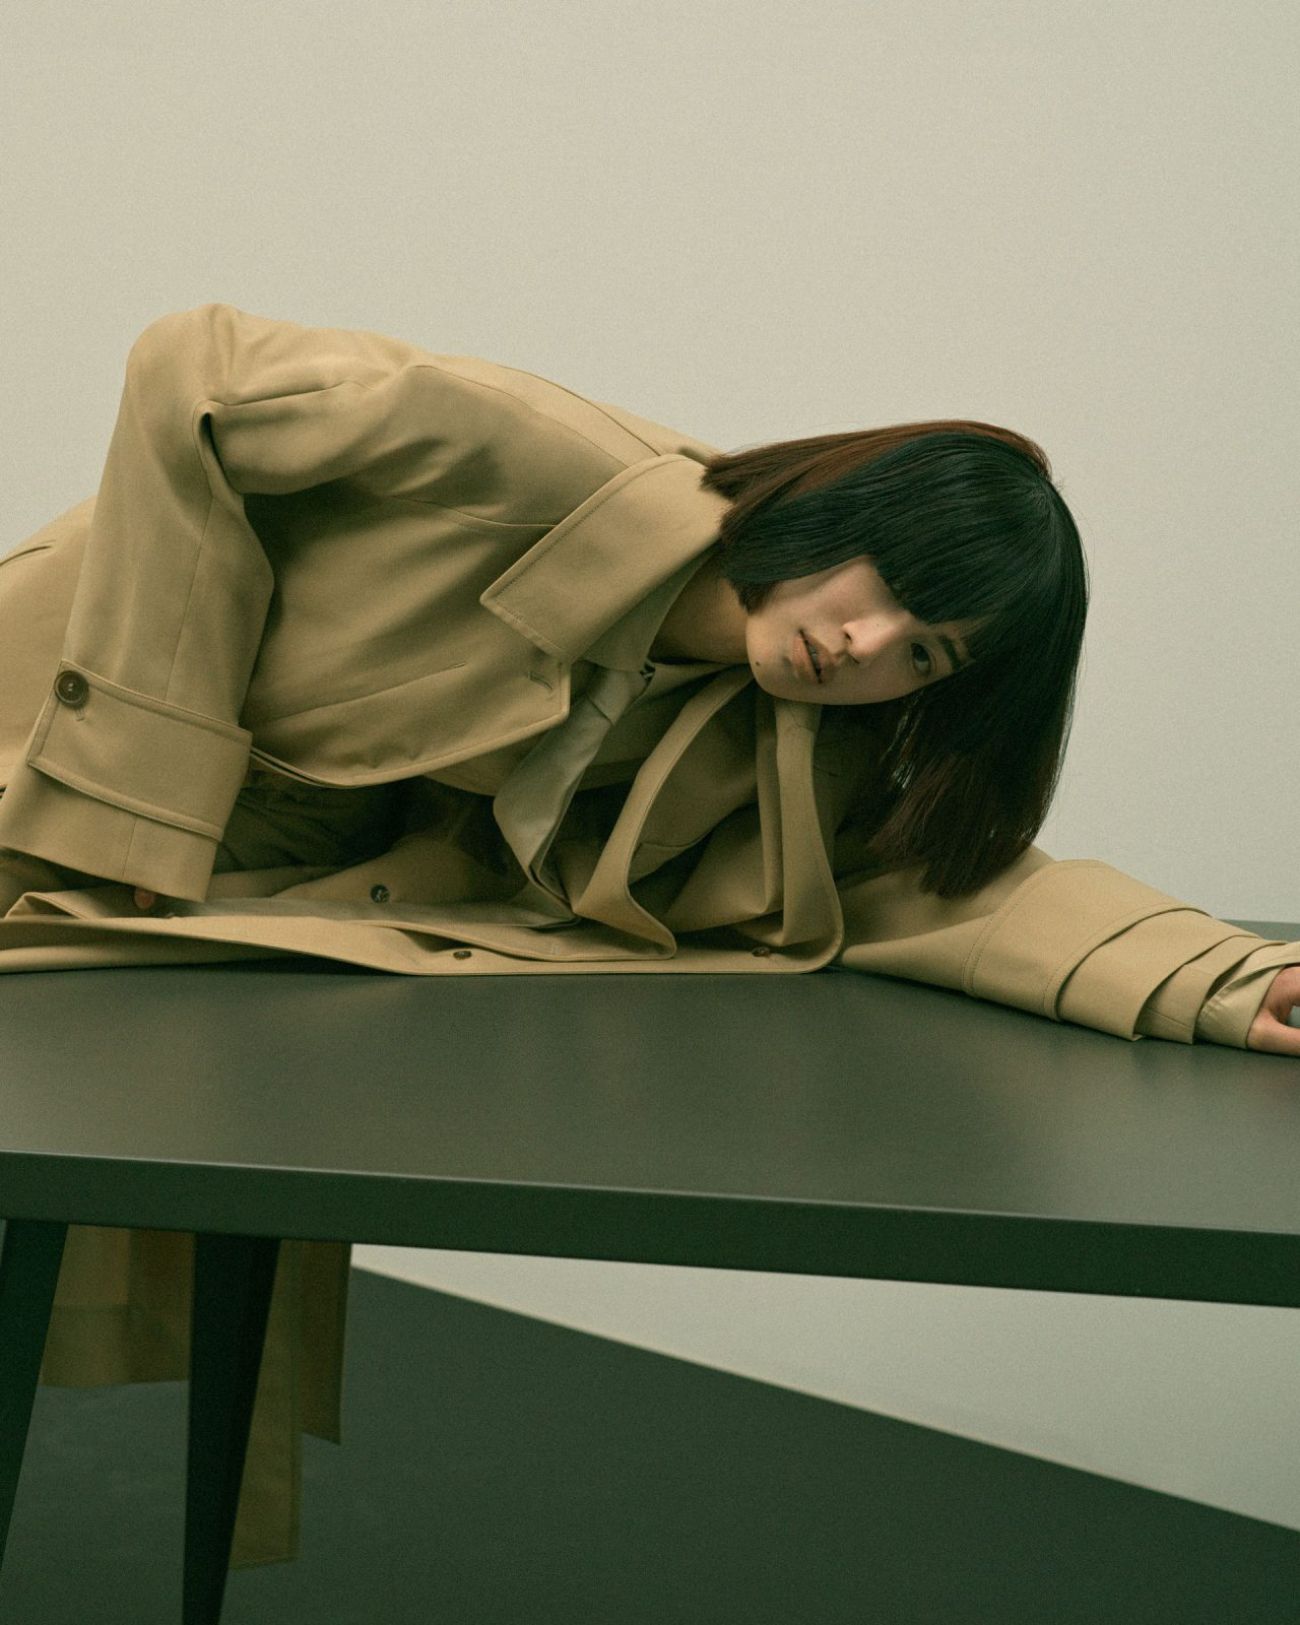 Karen Fujii in Ferragamo by Naoto Usami for The Fashion Post Japan Spring 2023